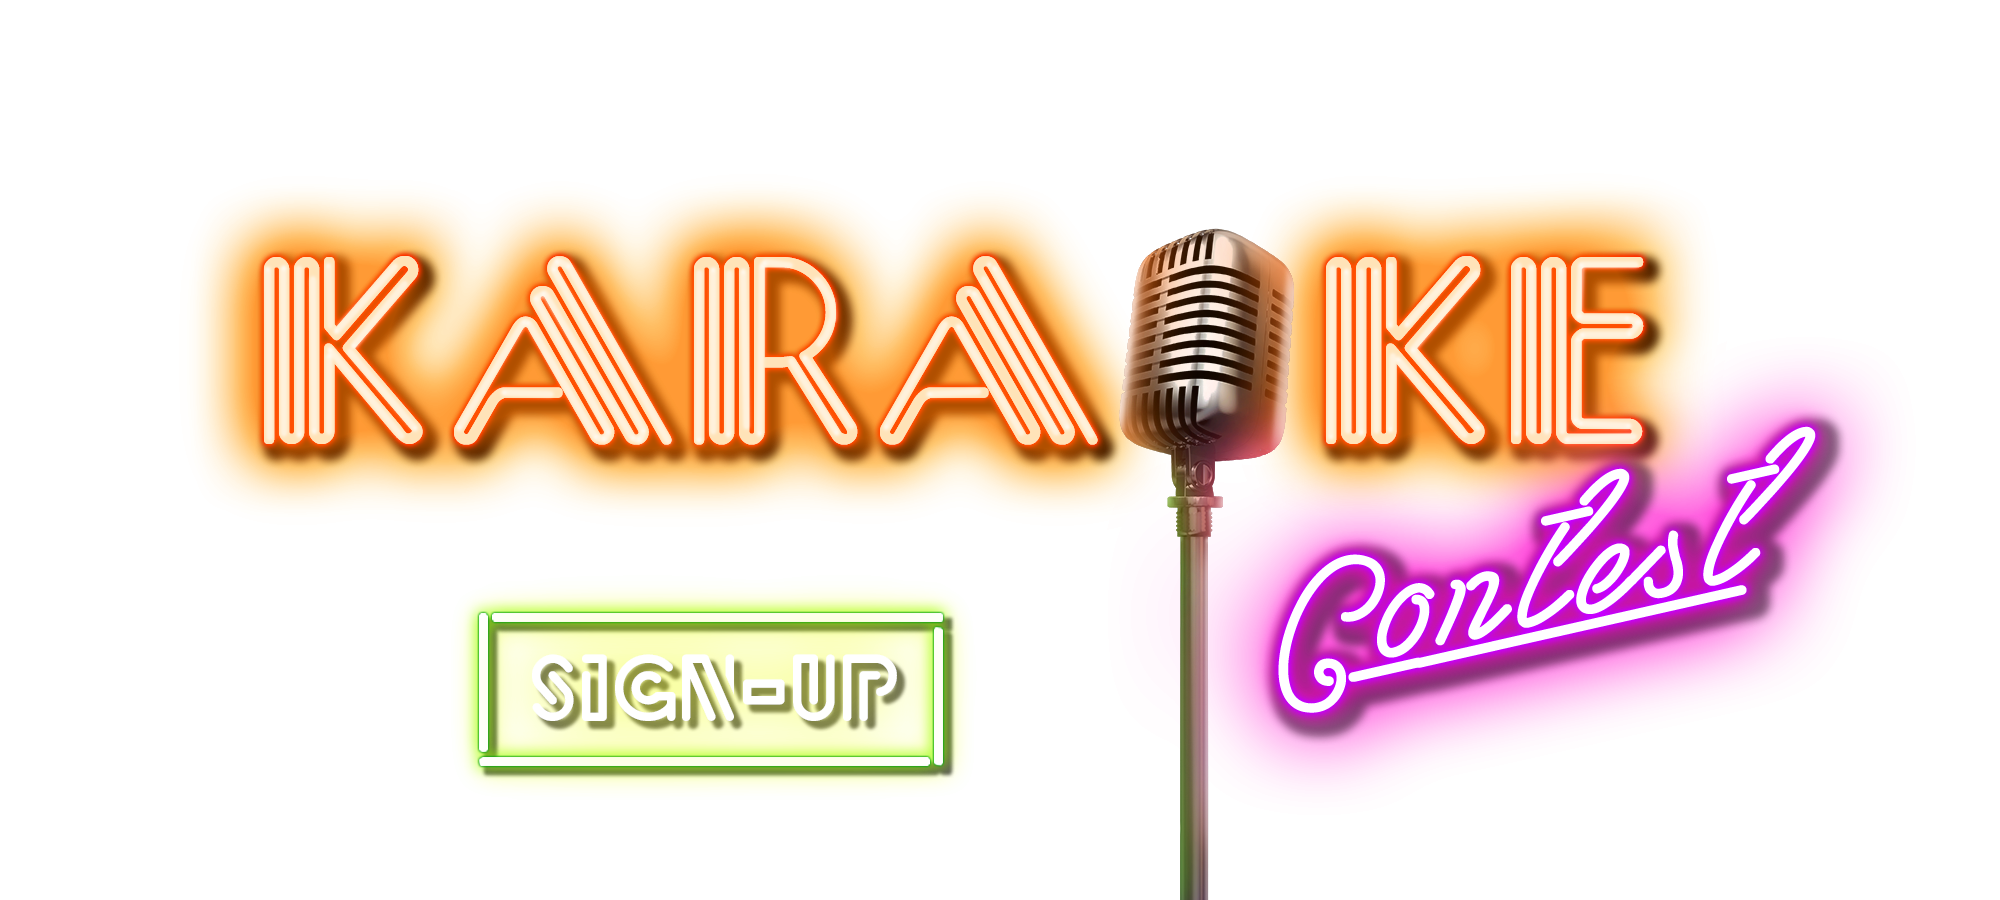 Karaoke downloads. Караоке. Караоке надпись. Караоке лого. Микрофон логотип.